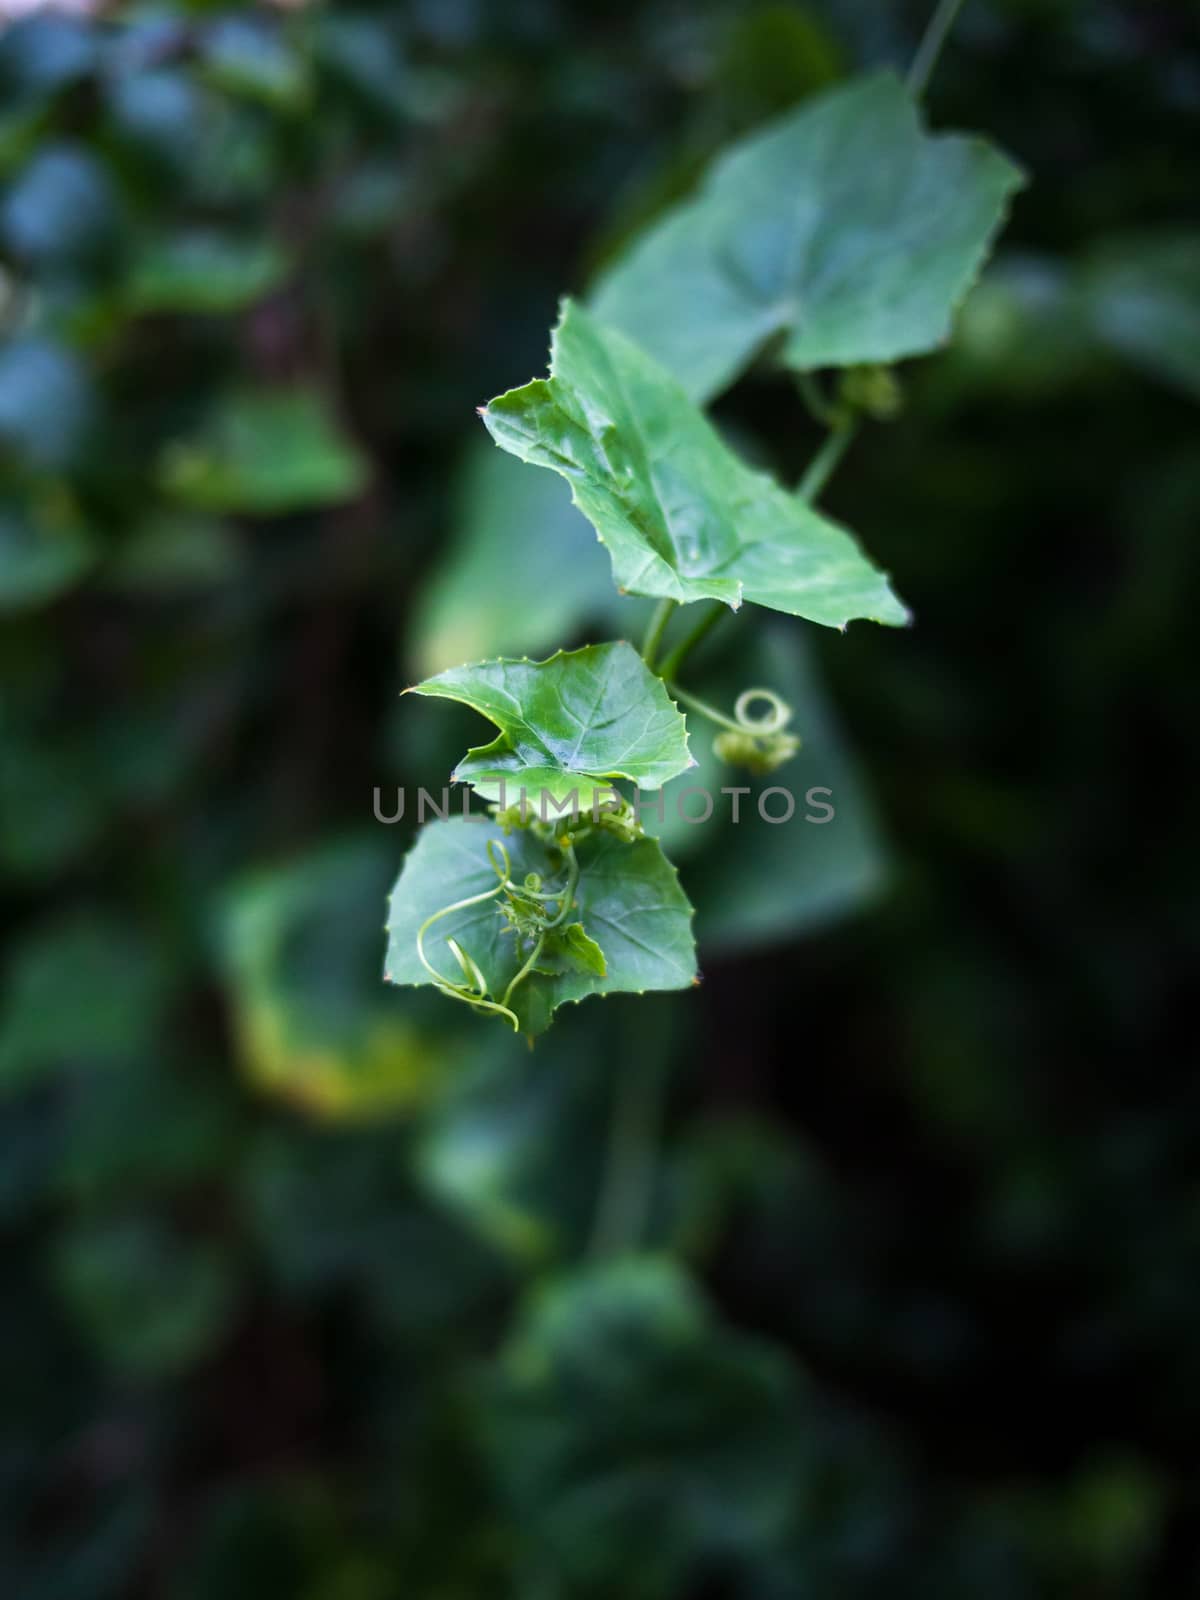 ivy gourd leaves by antpkr